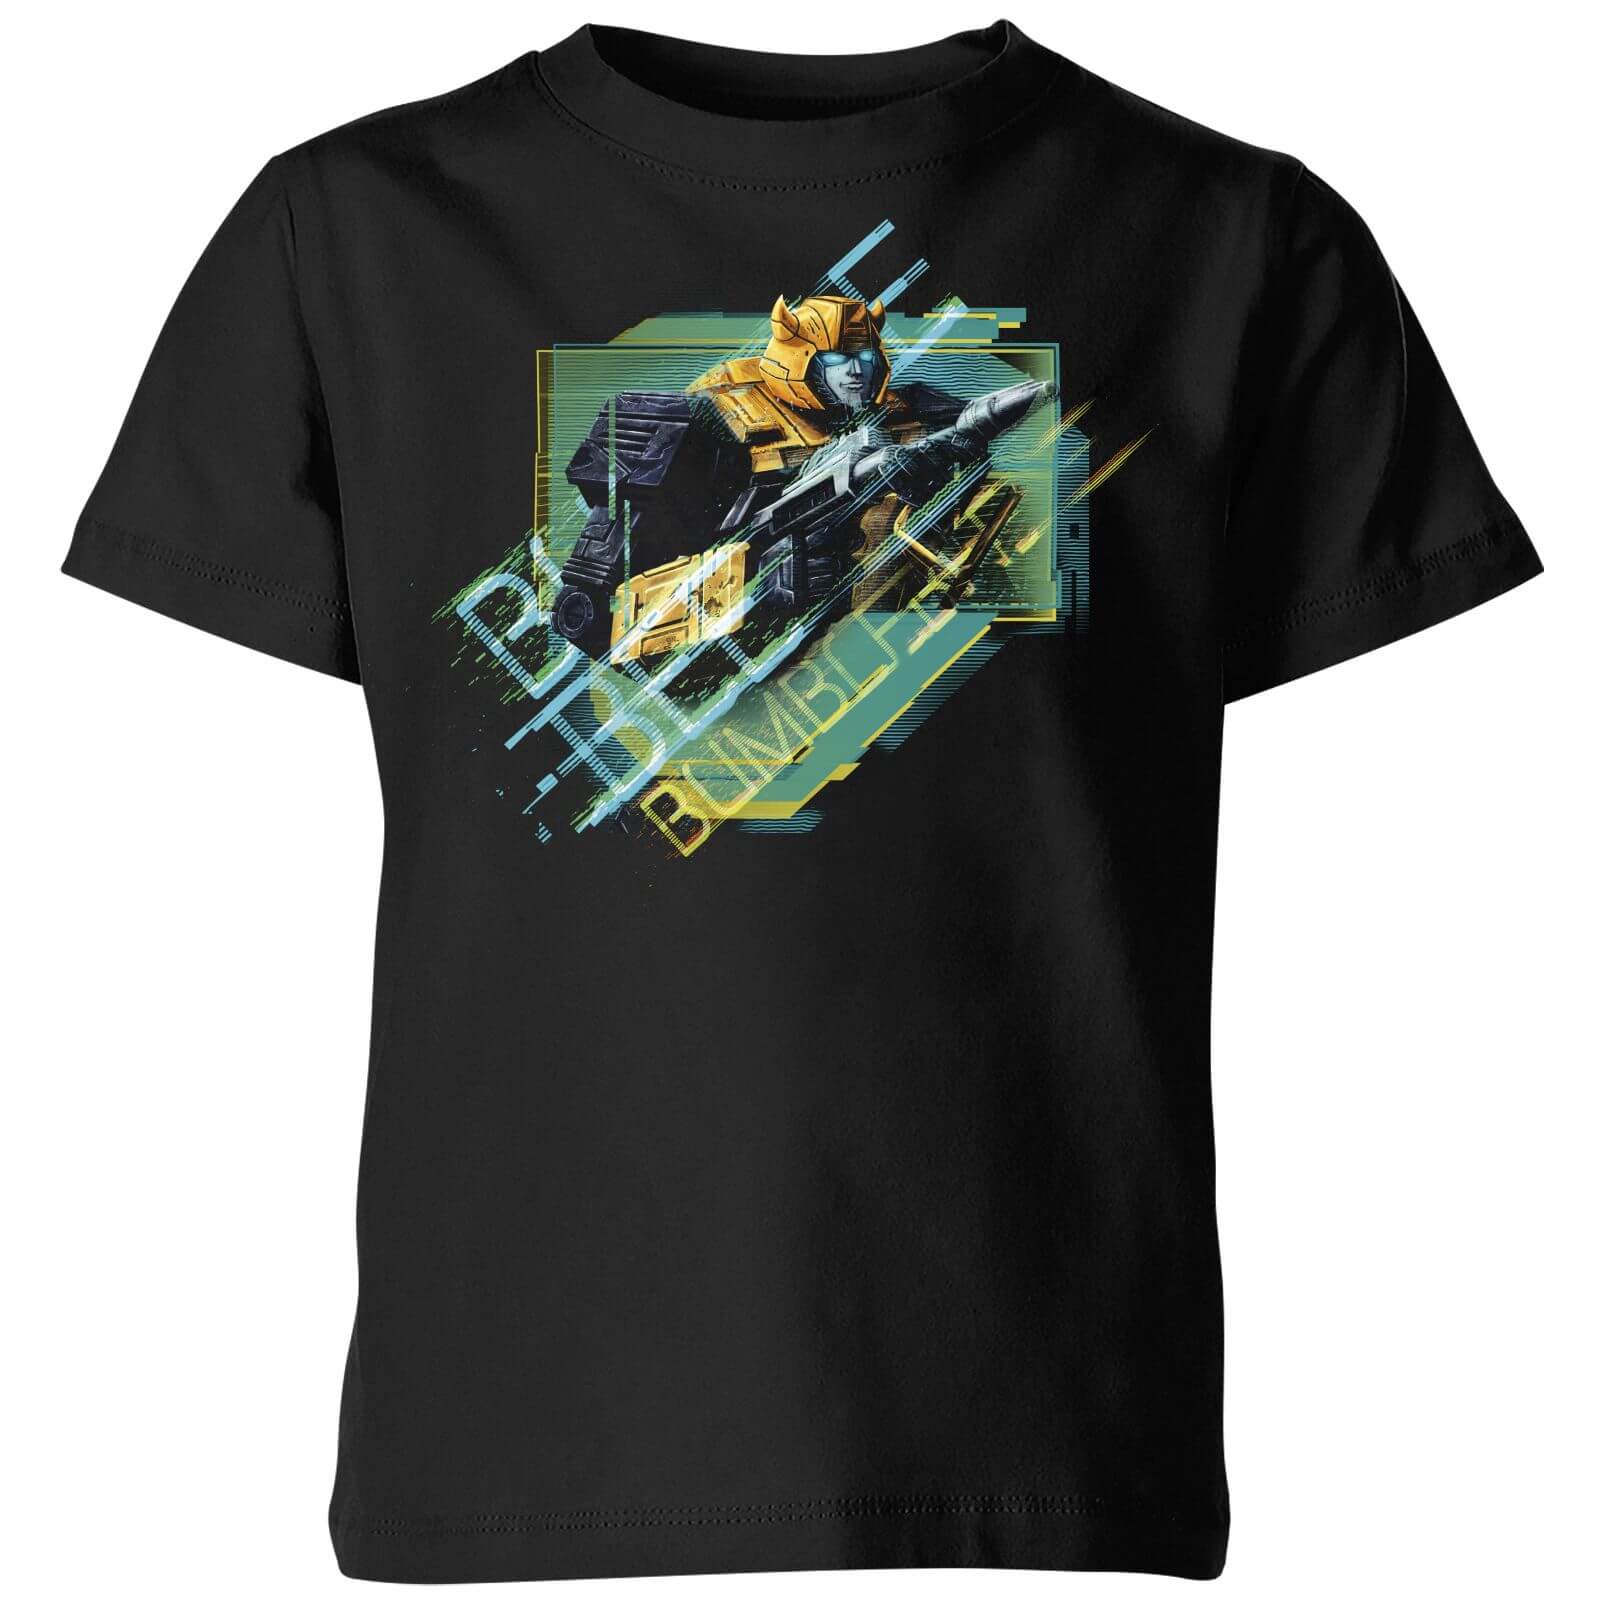 Transformers Bumble Bee Glitch Kids' T-Shirt - Black - 5-6 Years - Black